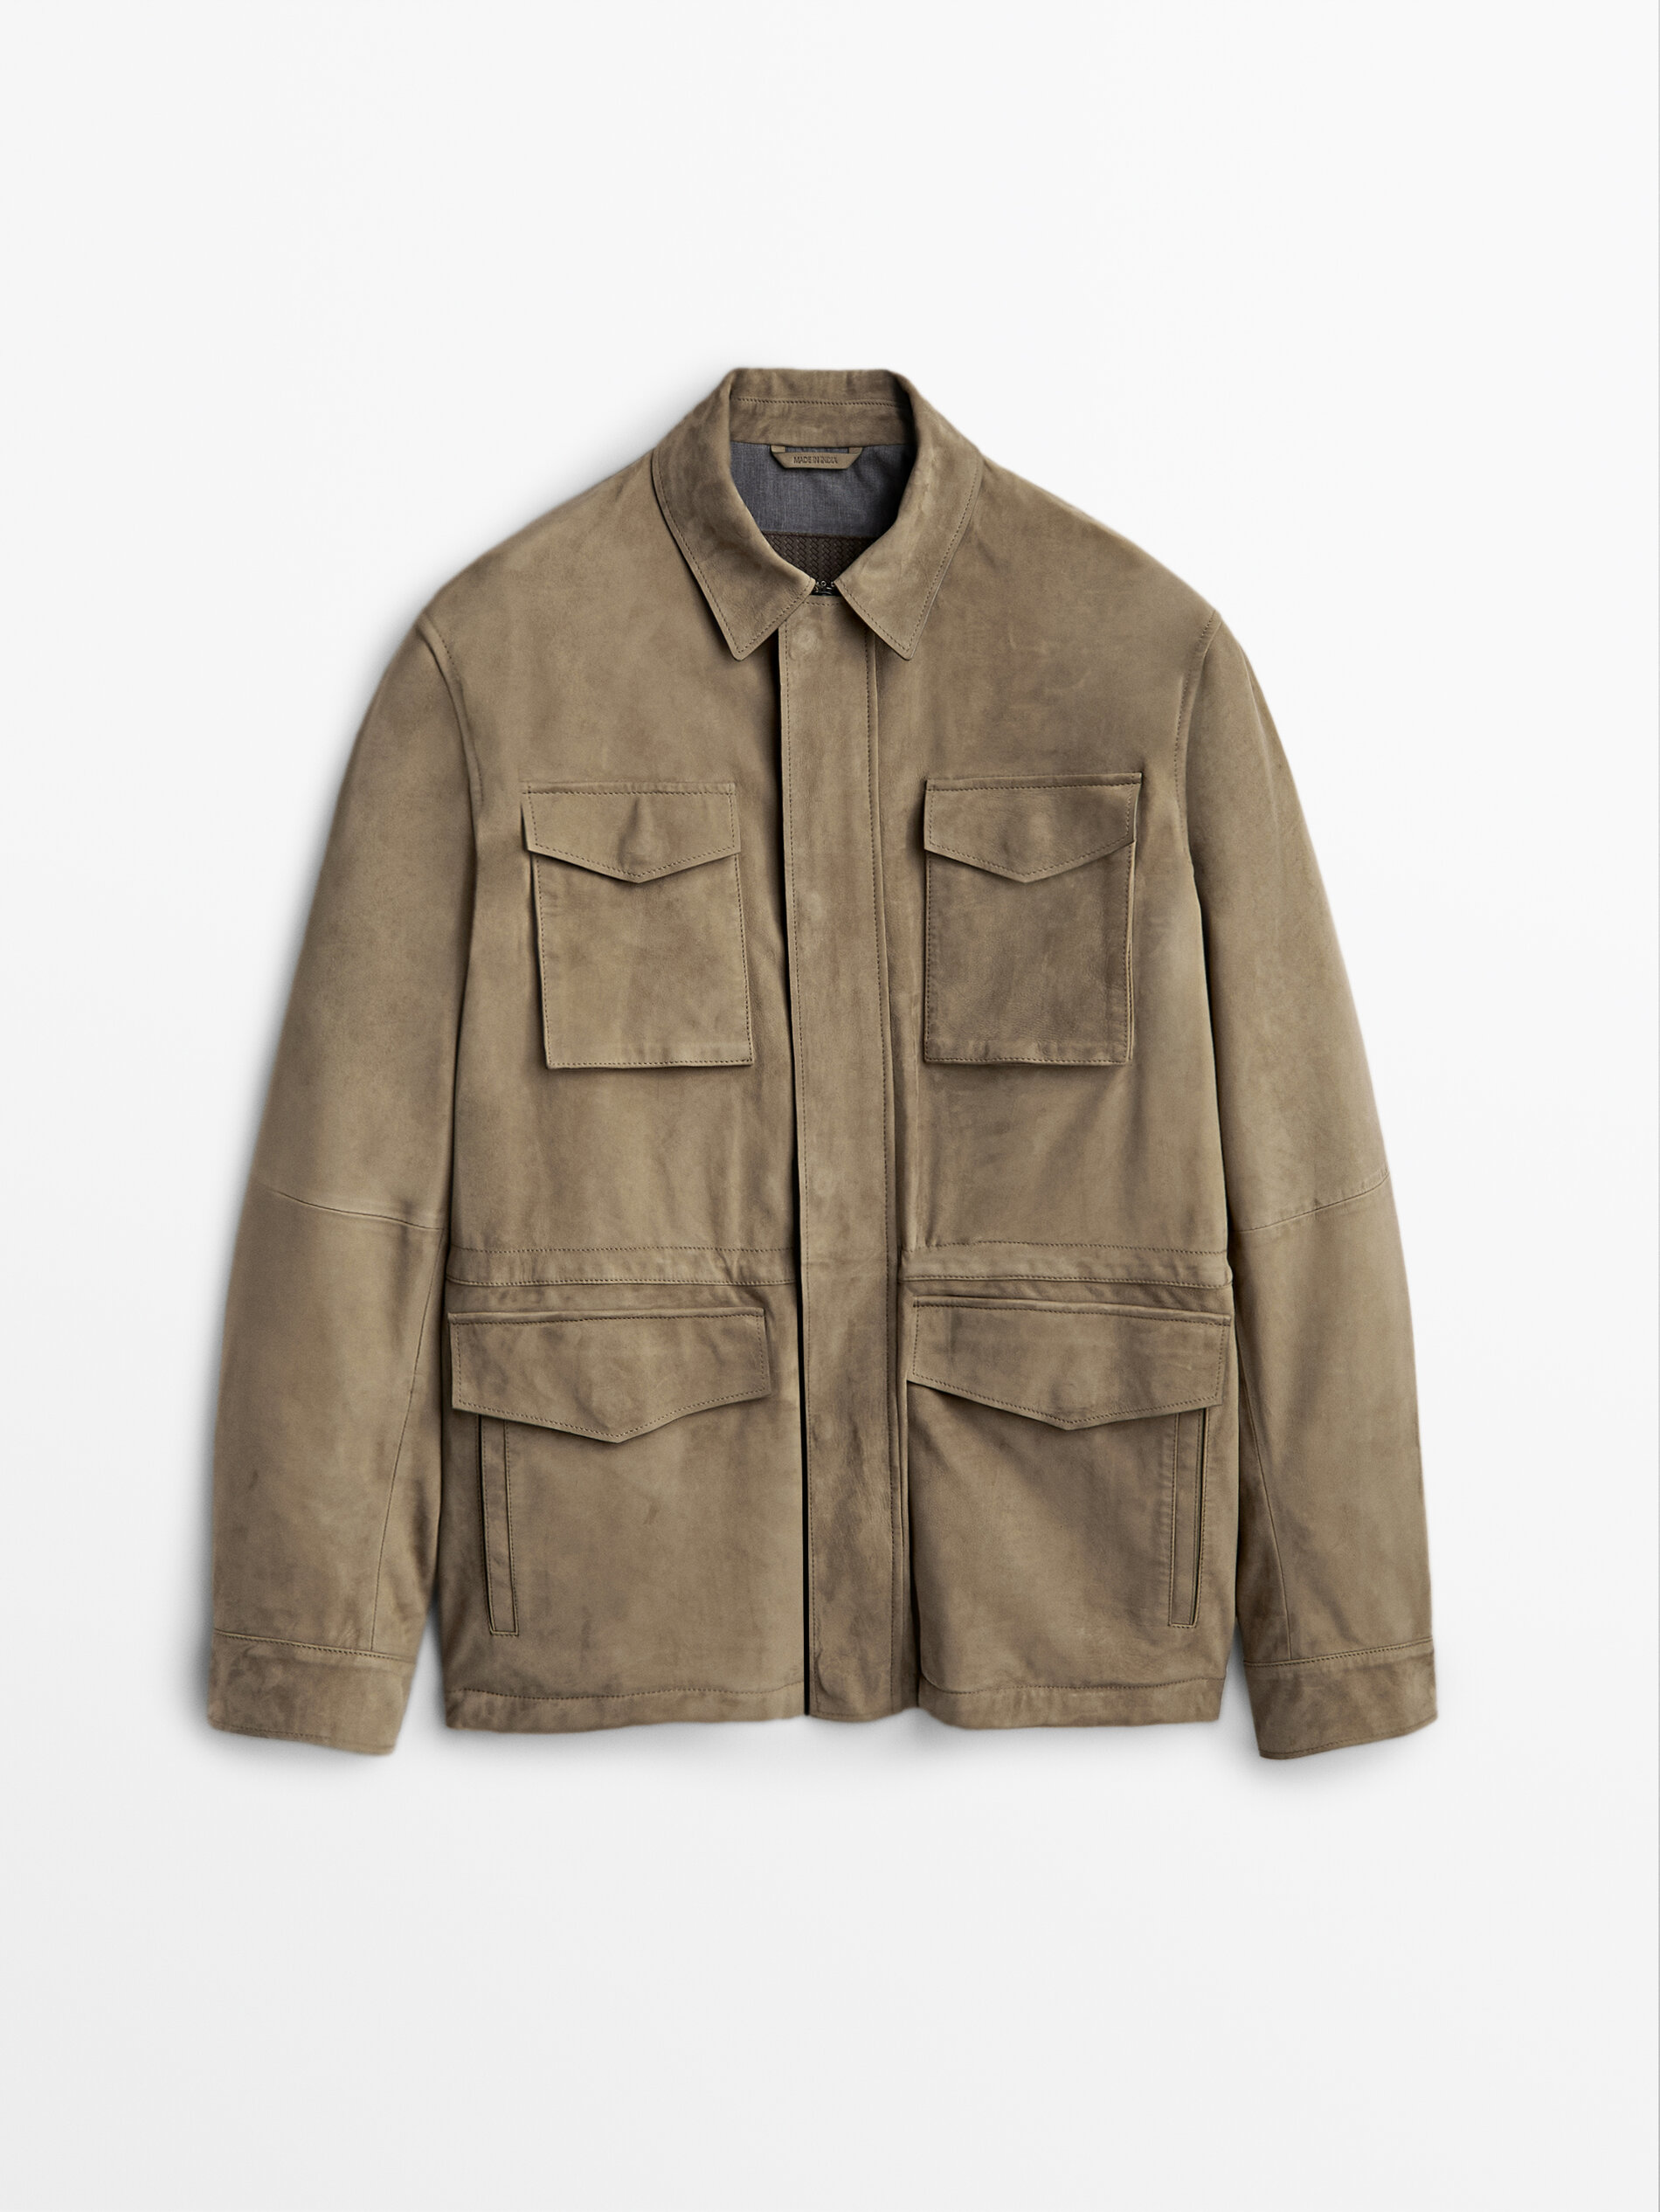 Massimo Dutti Nubuck Leather Safari Jacket - Limited Edition - Big